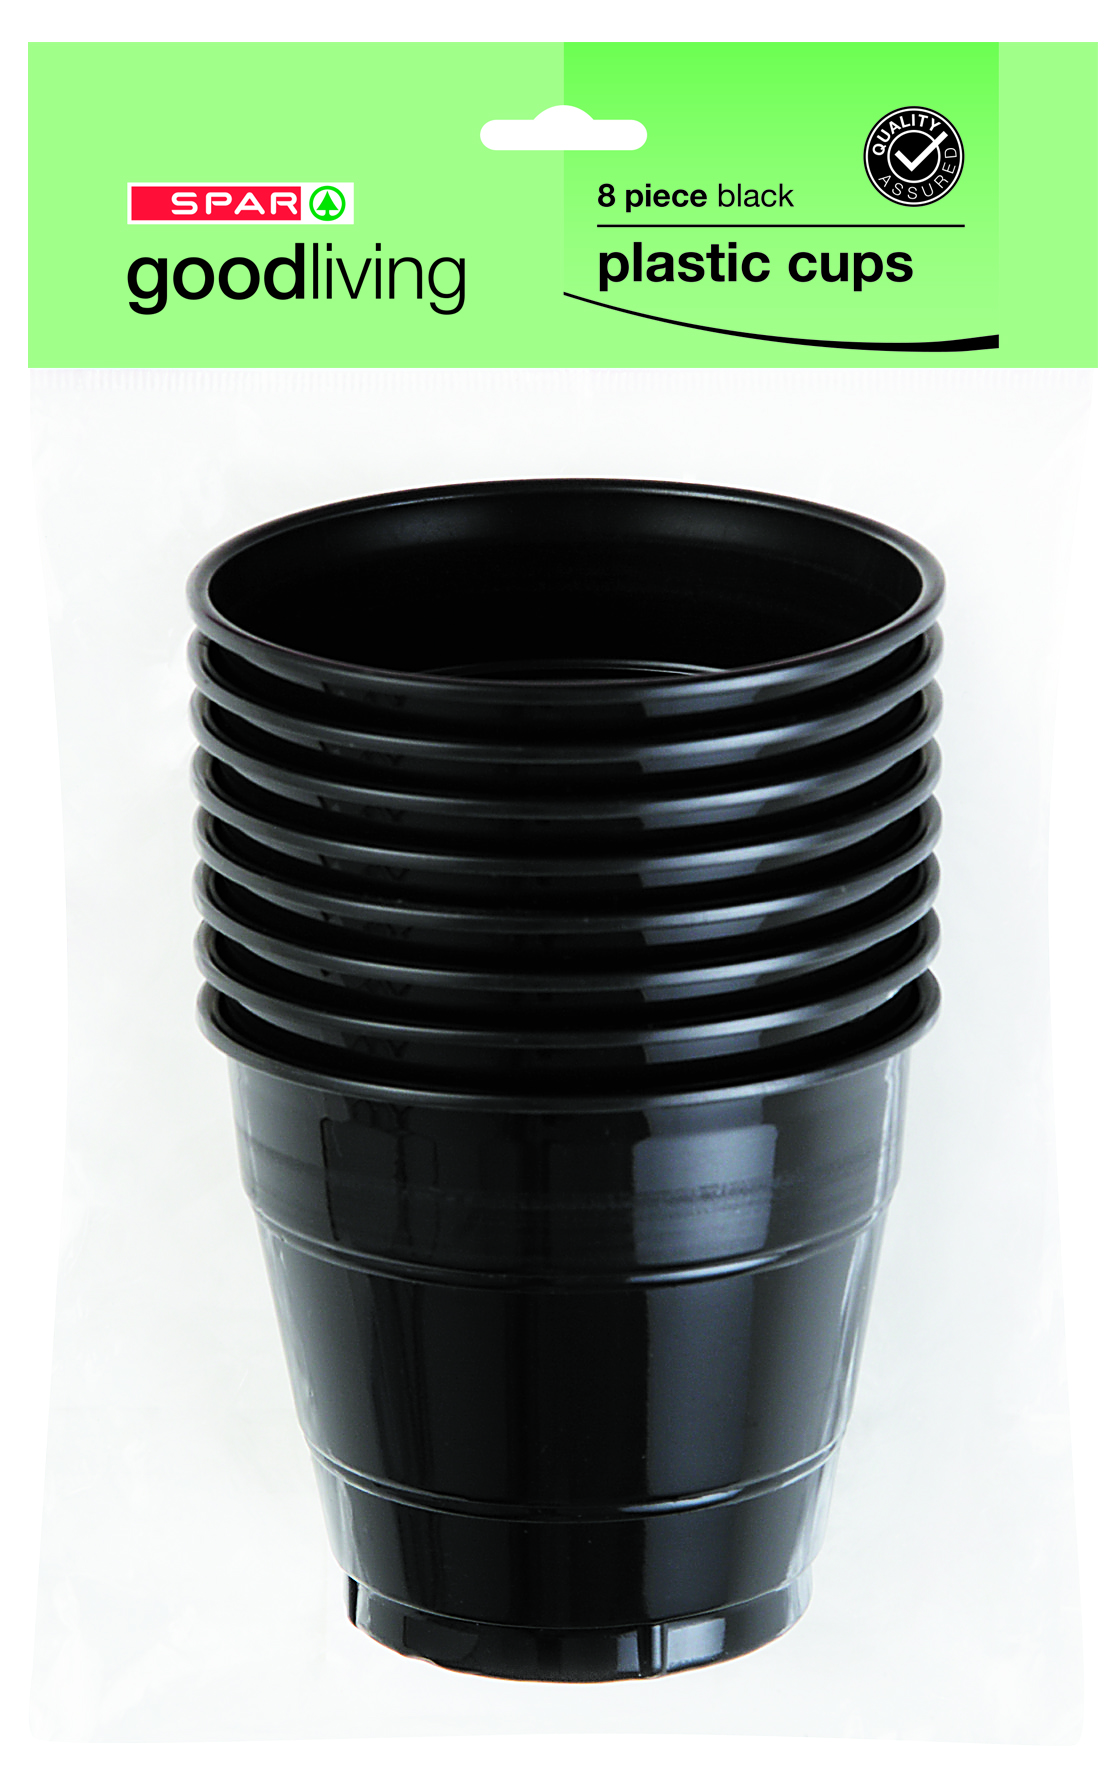 plastic cups - black (8 piece)